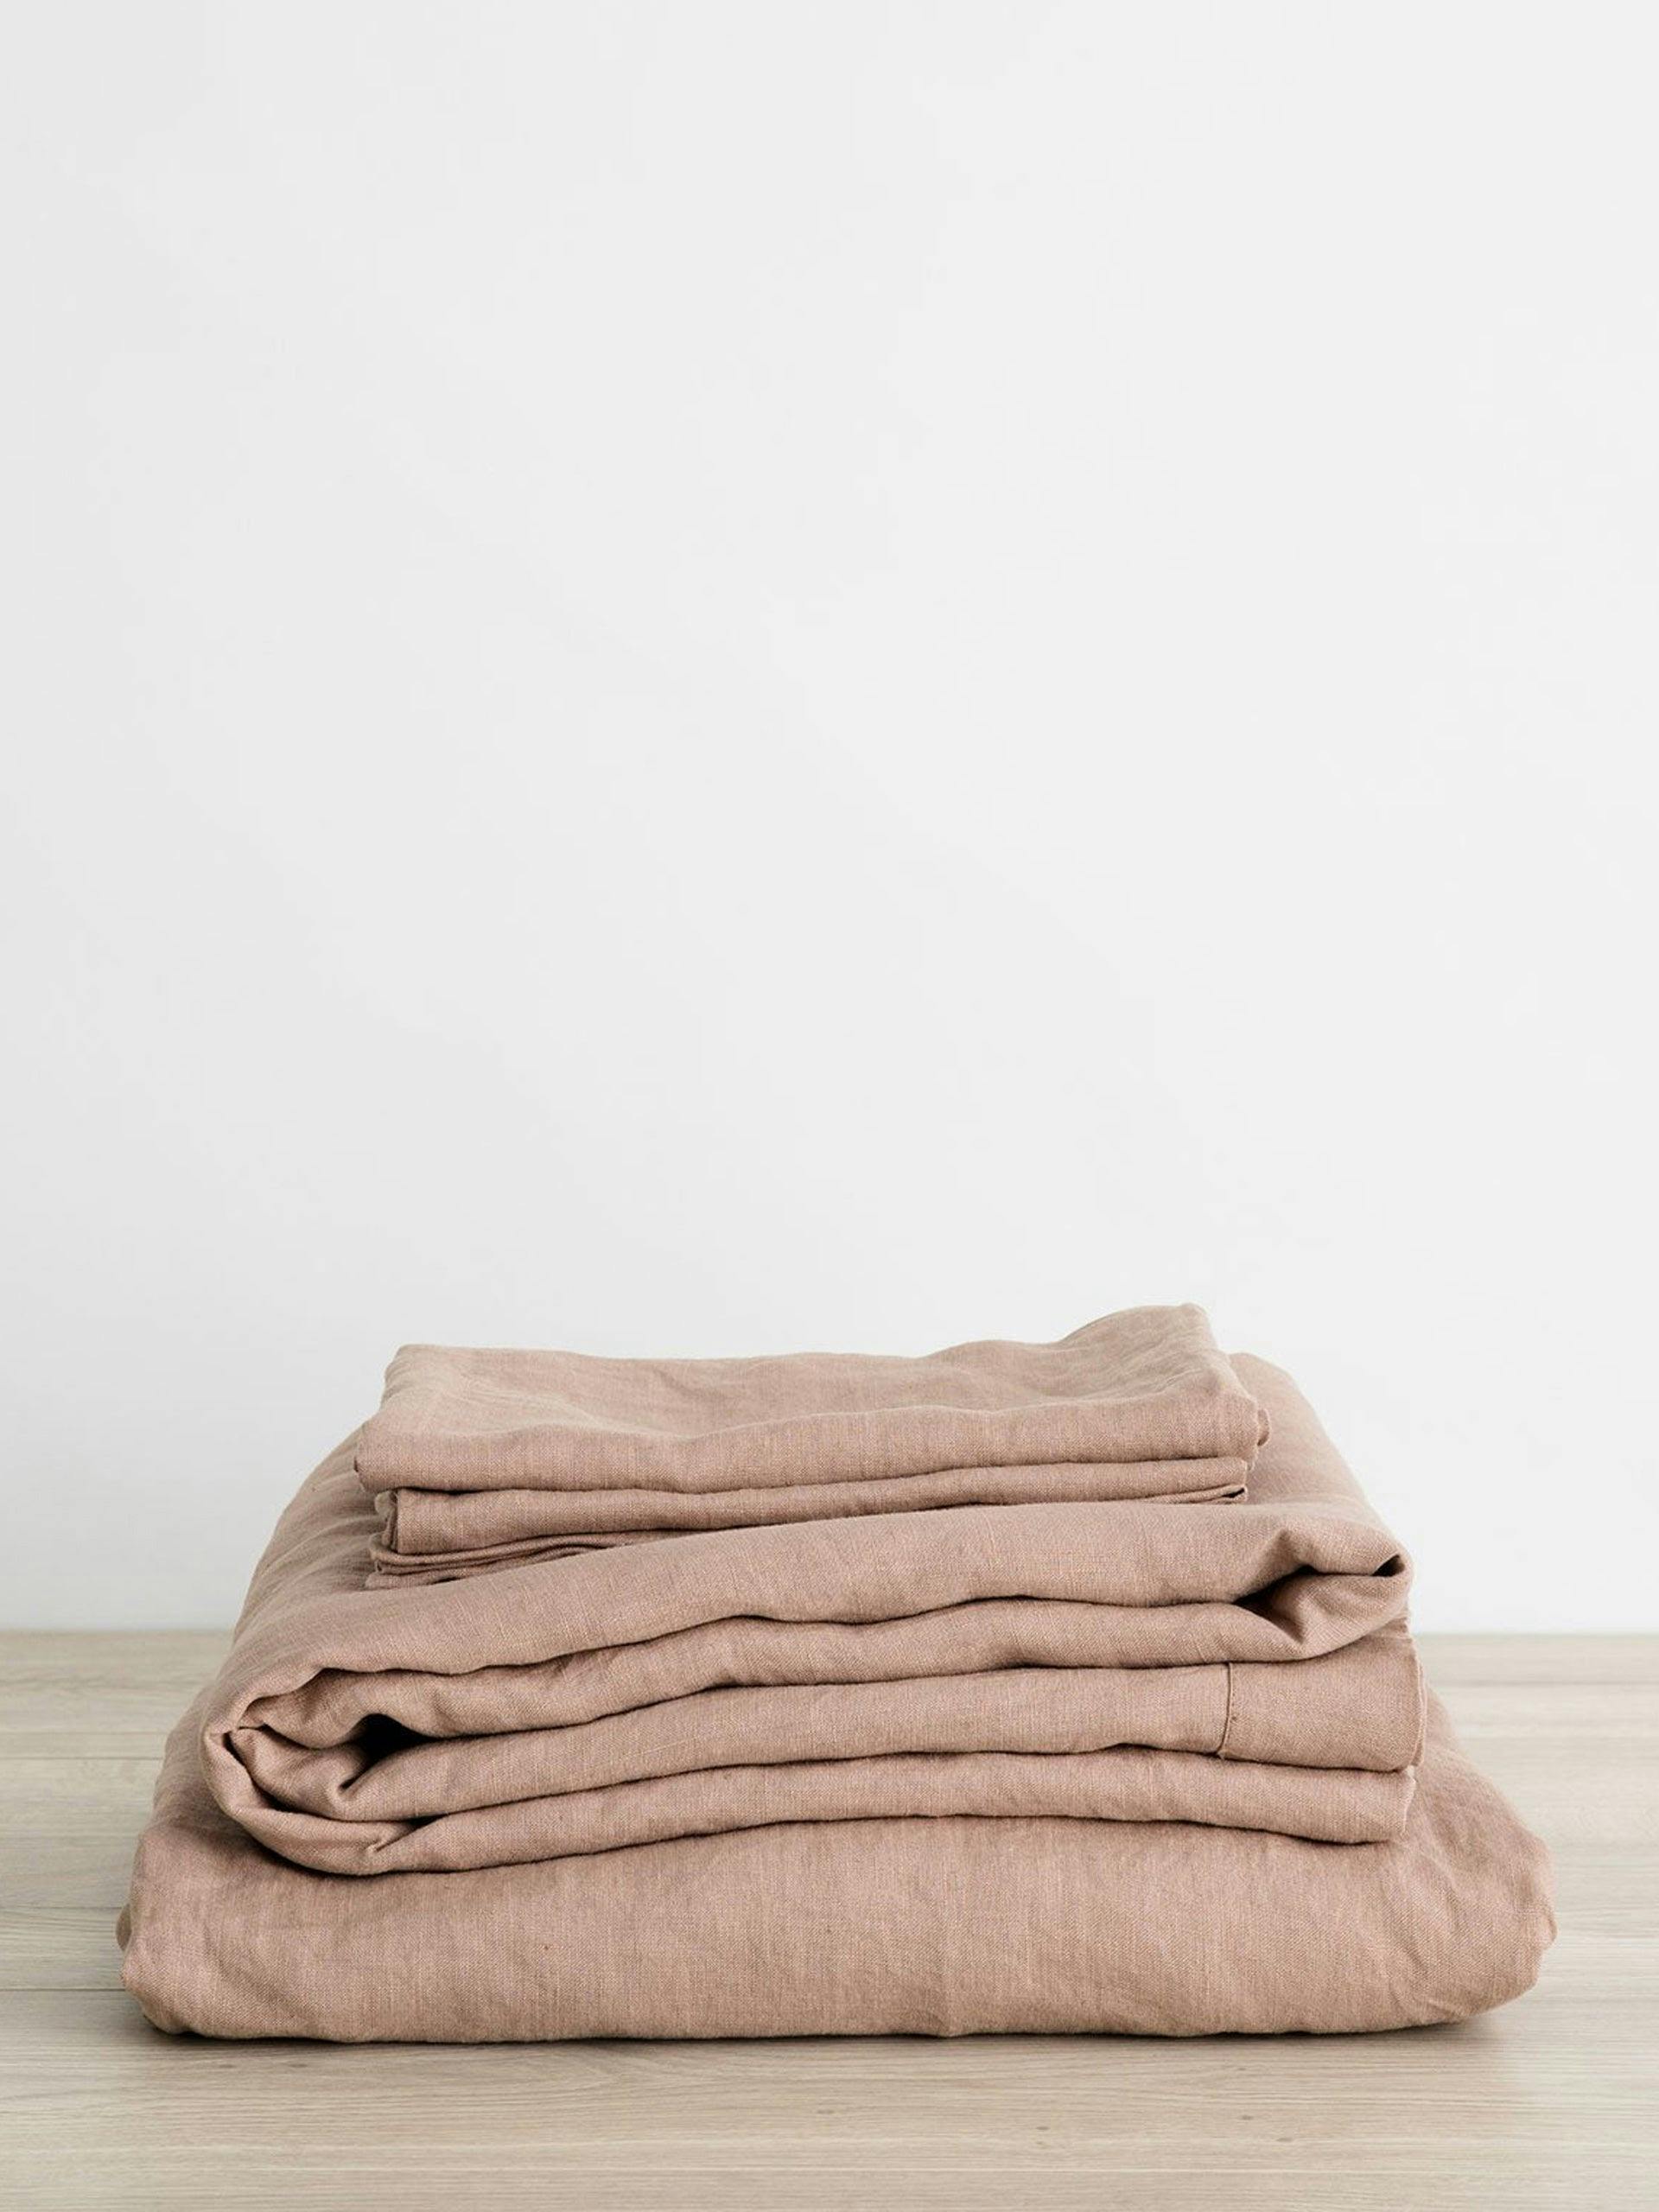 Fawn linen sheet set with pillowcases